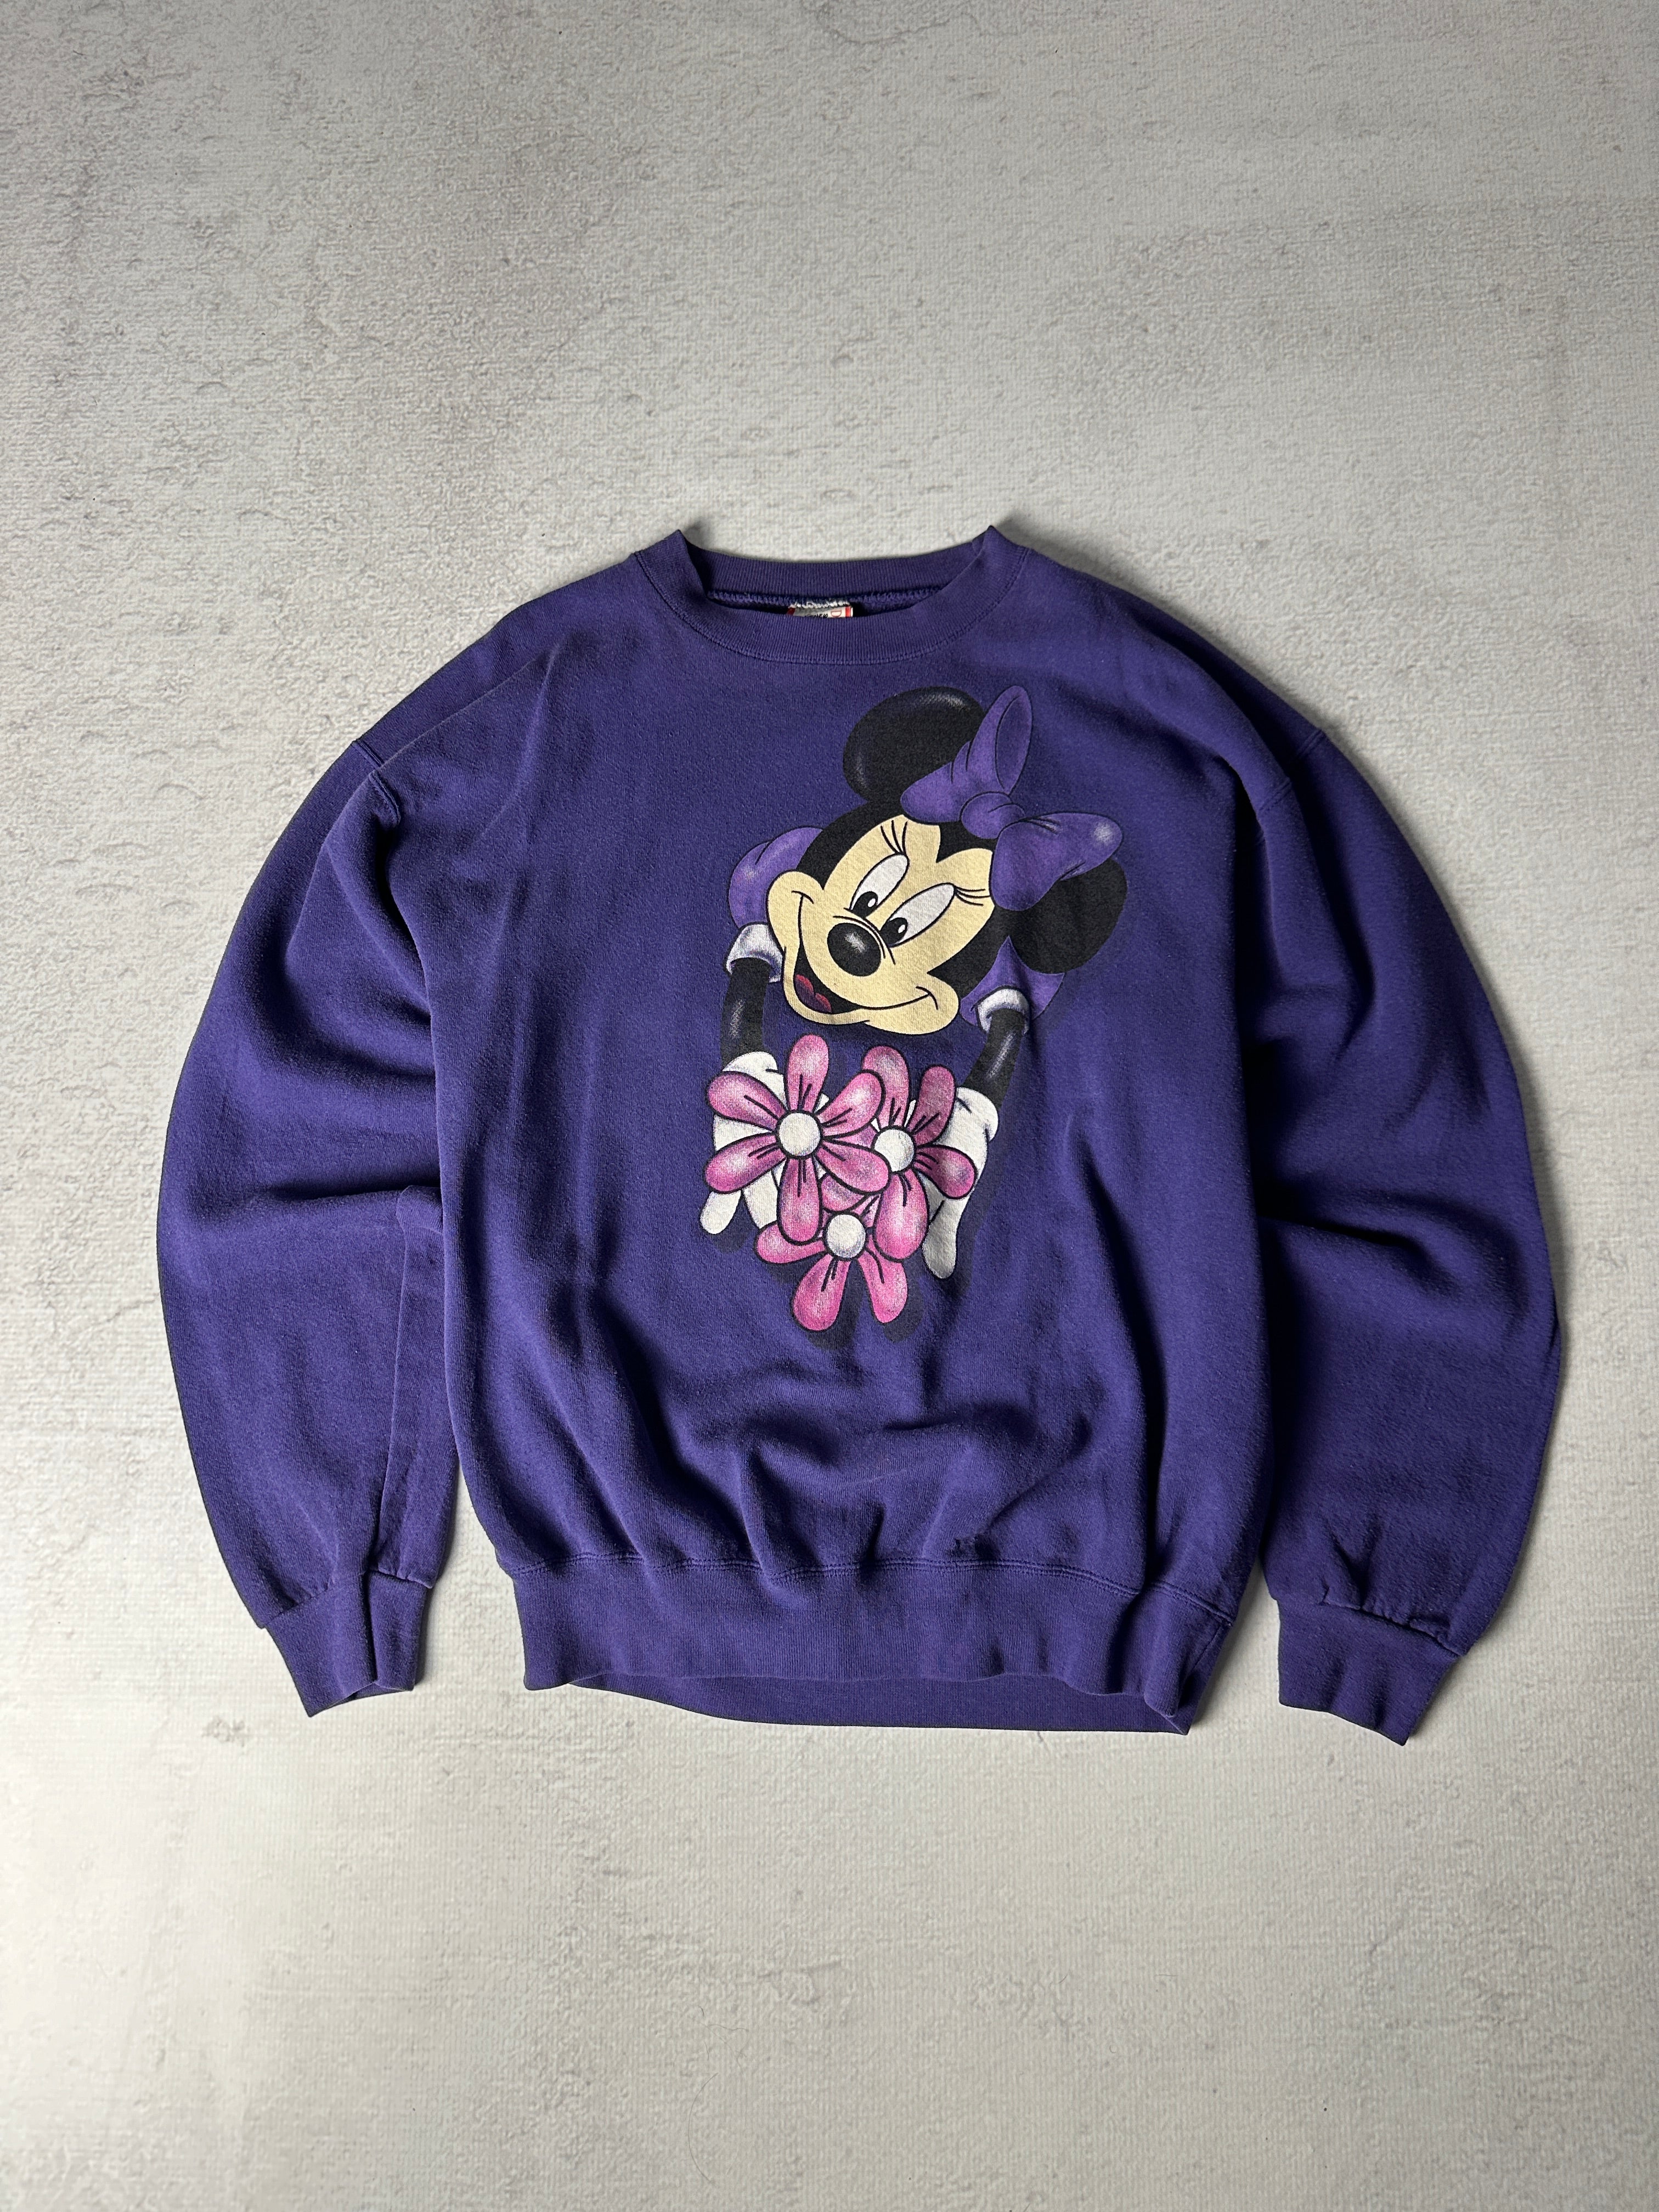 Vintage Disney Minnie Mouse Crewneck Sweatshirt - Women's Medium